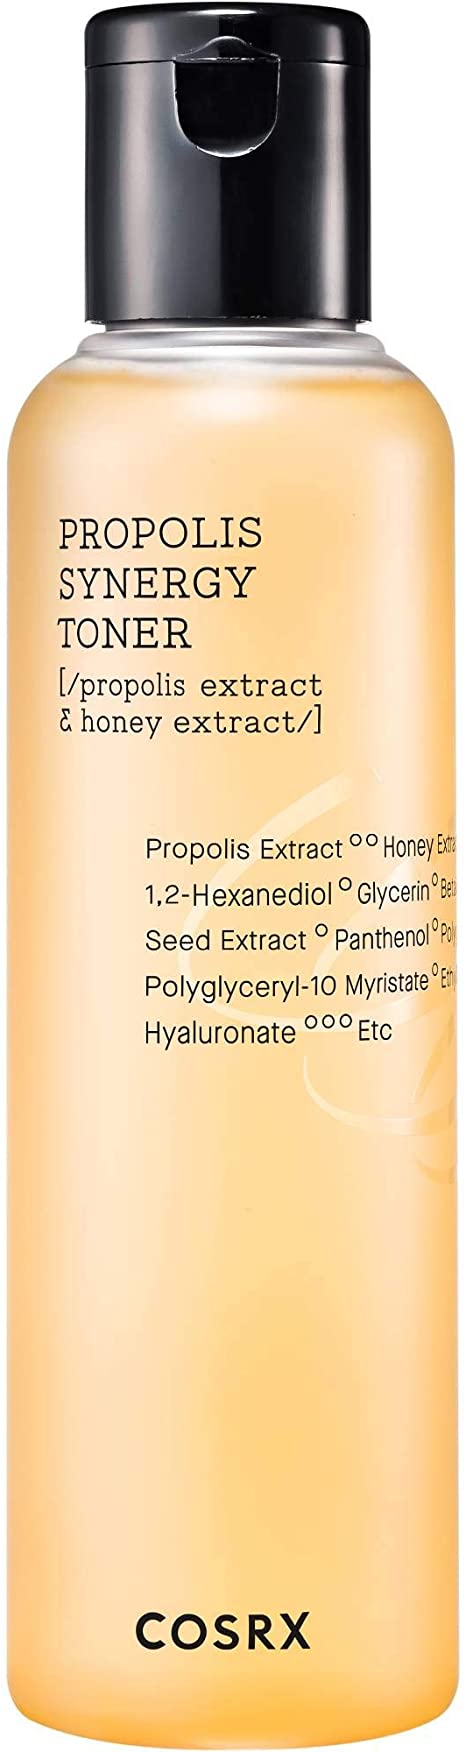 COSRX Full Fit Propolis Synergy Toner, 150 ml / 5.07 fl.oz | Daily Boosting Toner with Propolis 72.6% | Korean Skin Care, Paraben Free